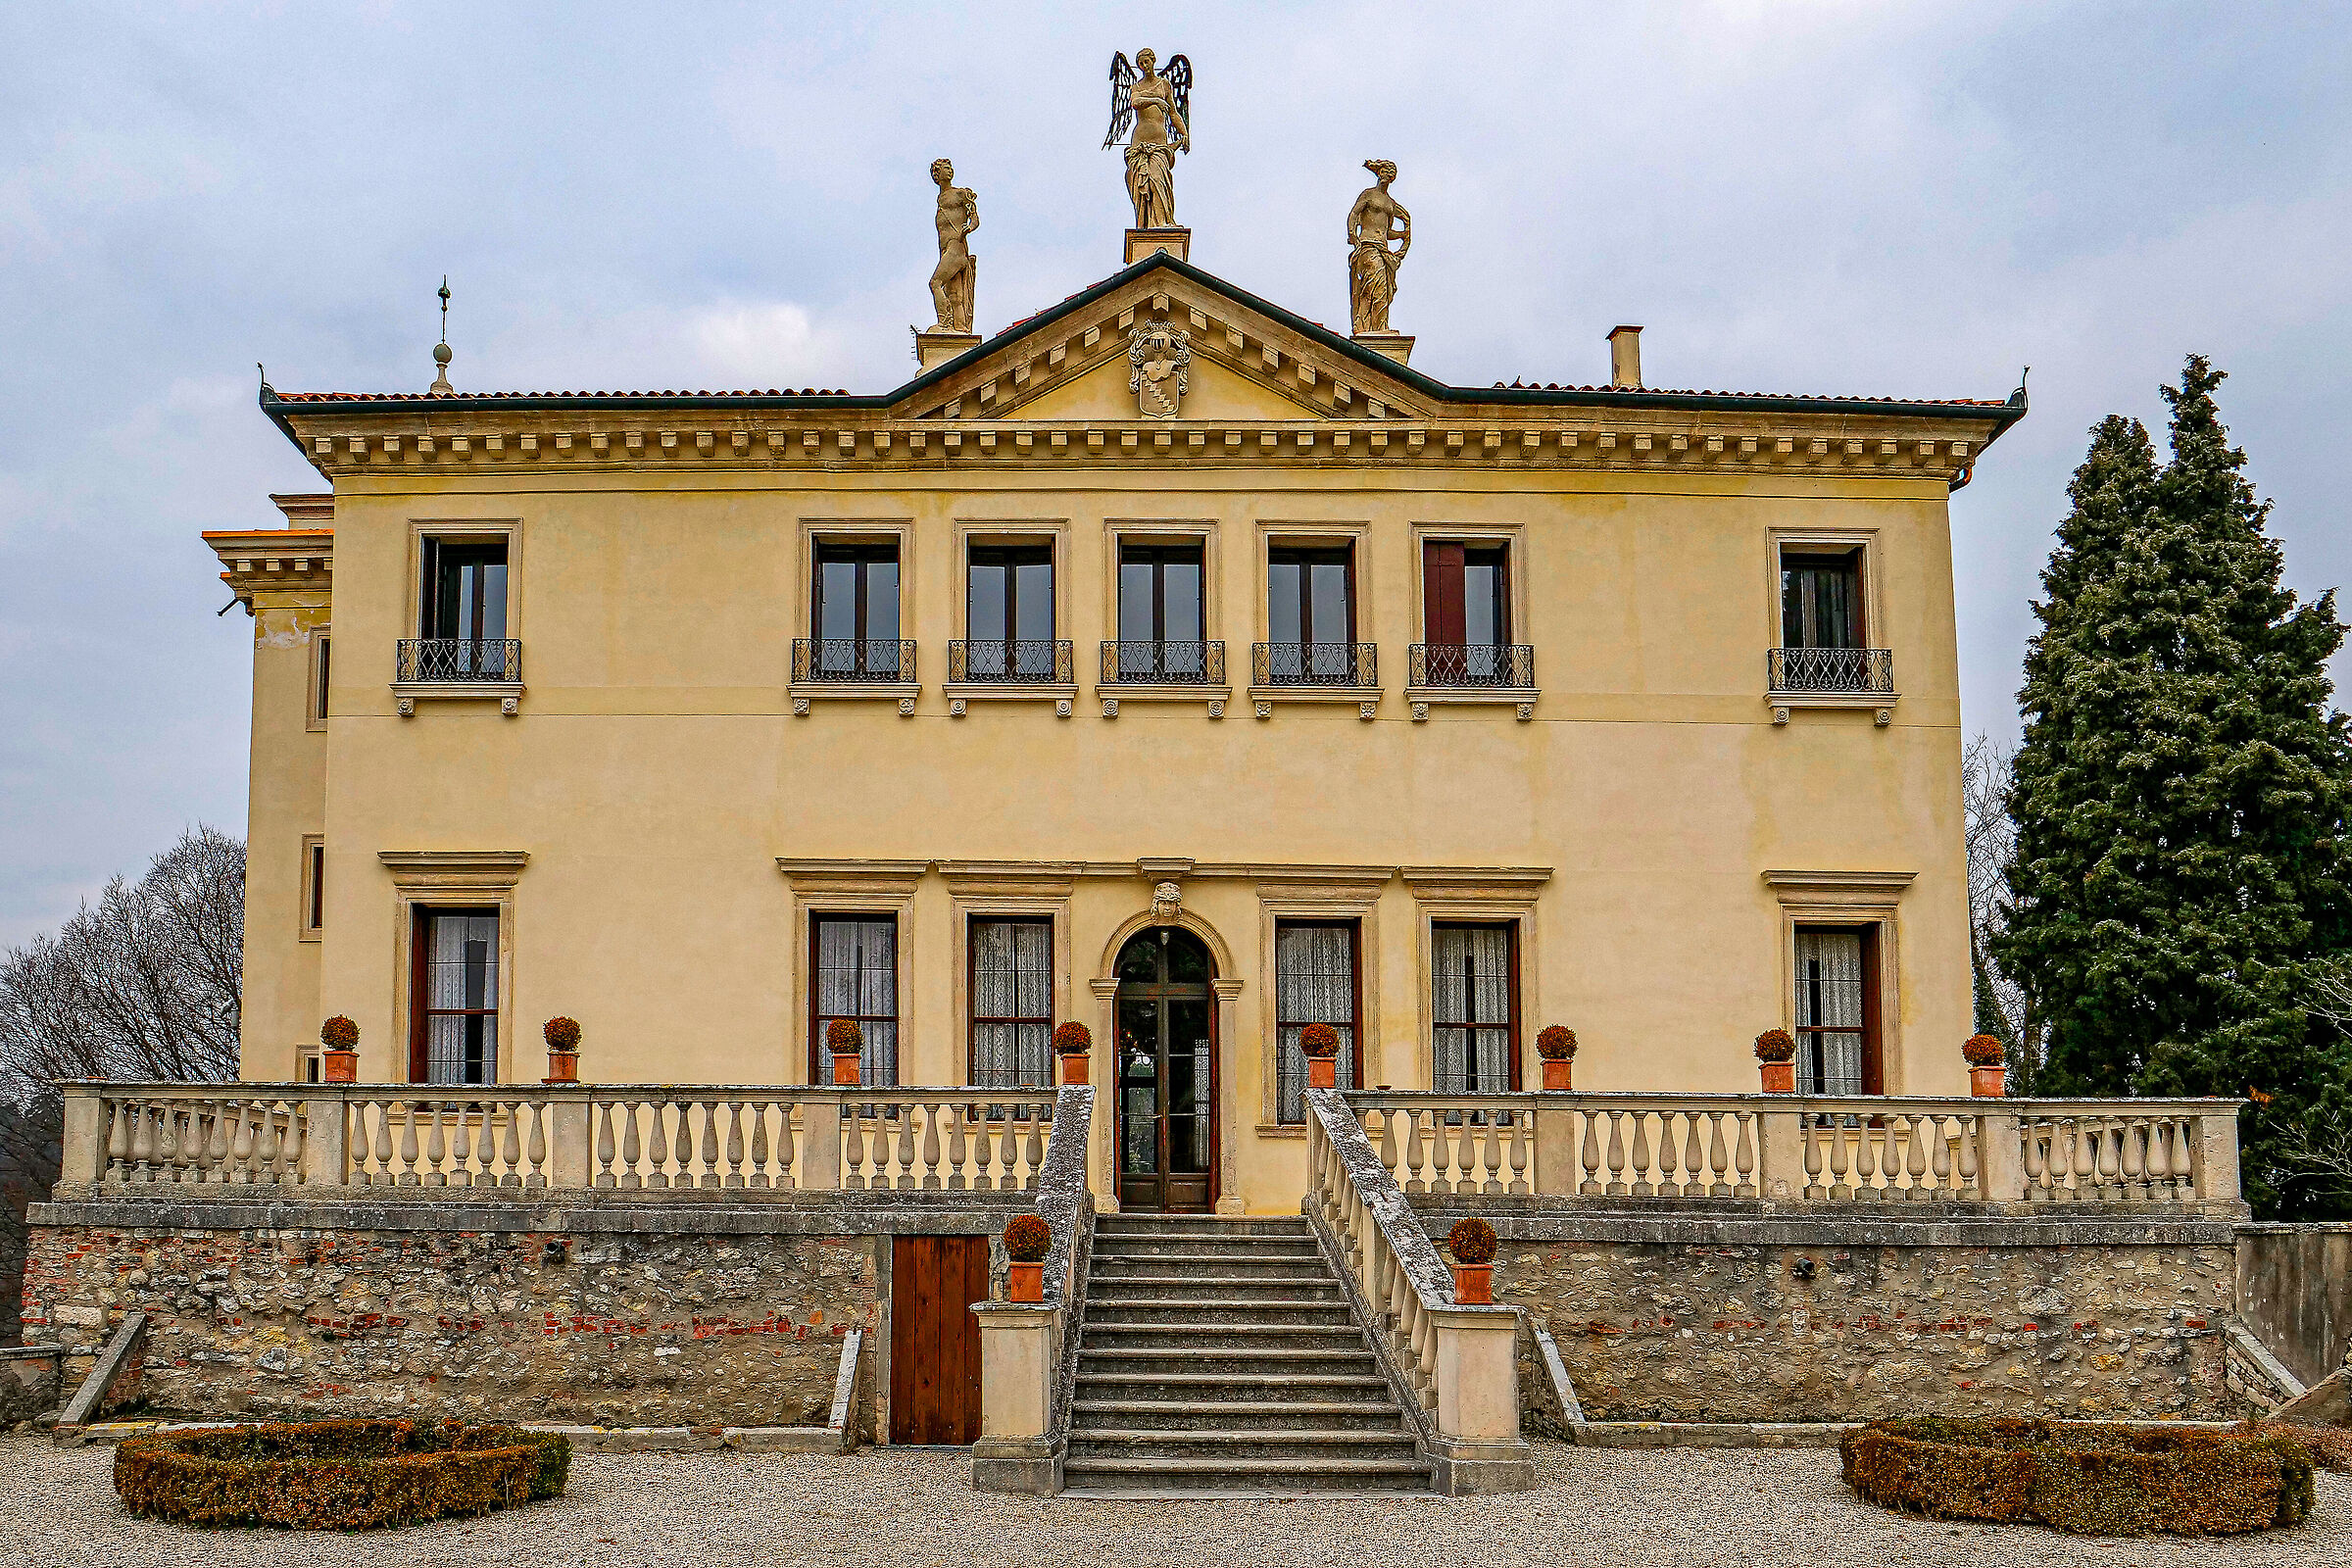 Villa Valmarana, front view of the building...